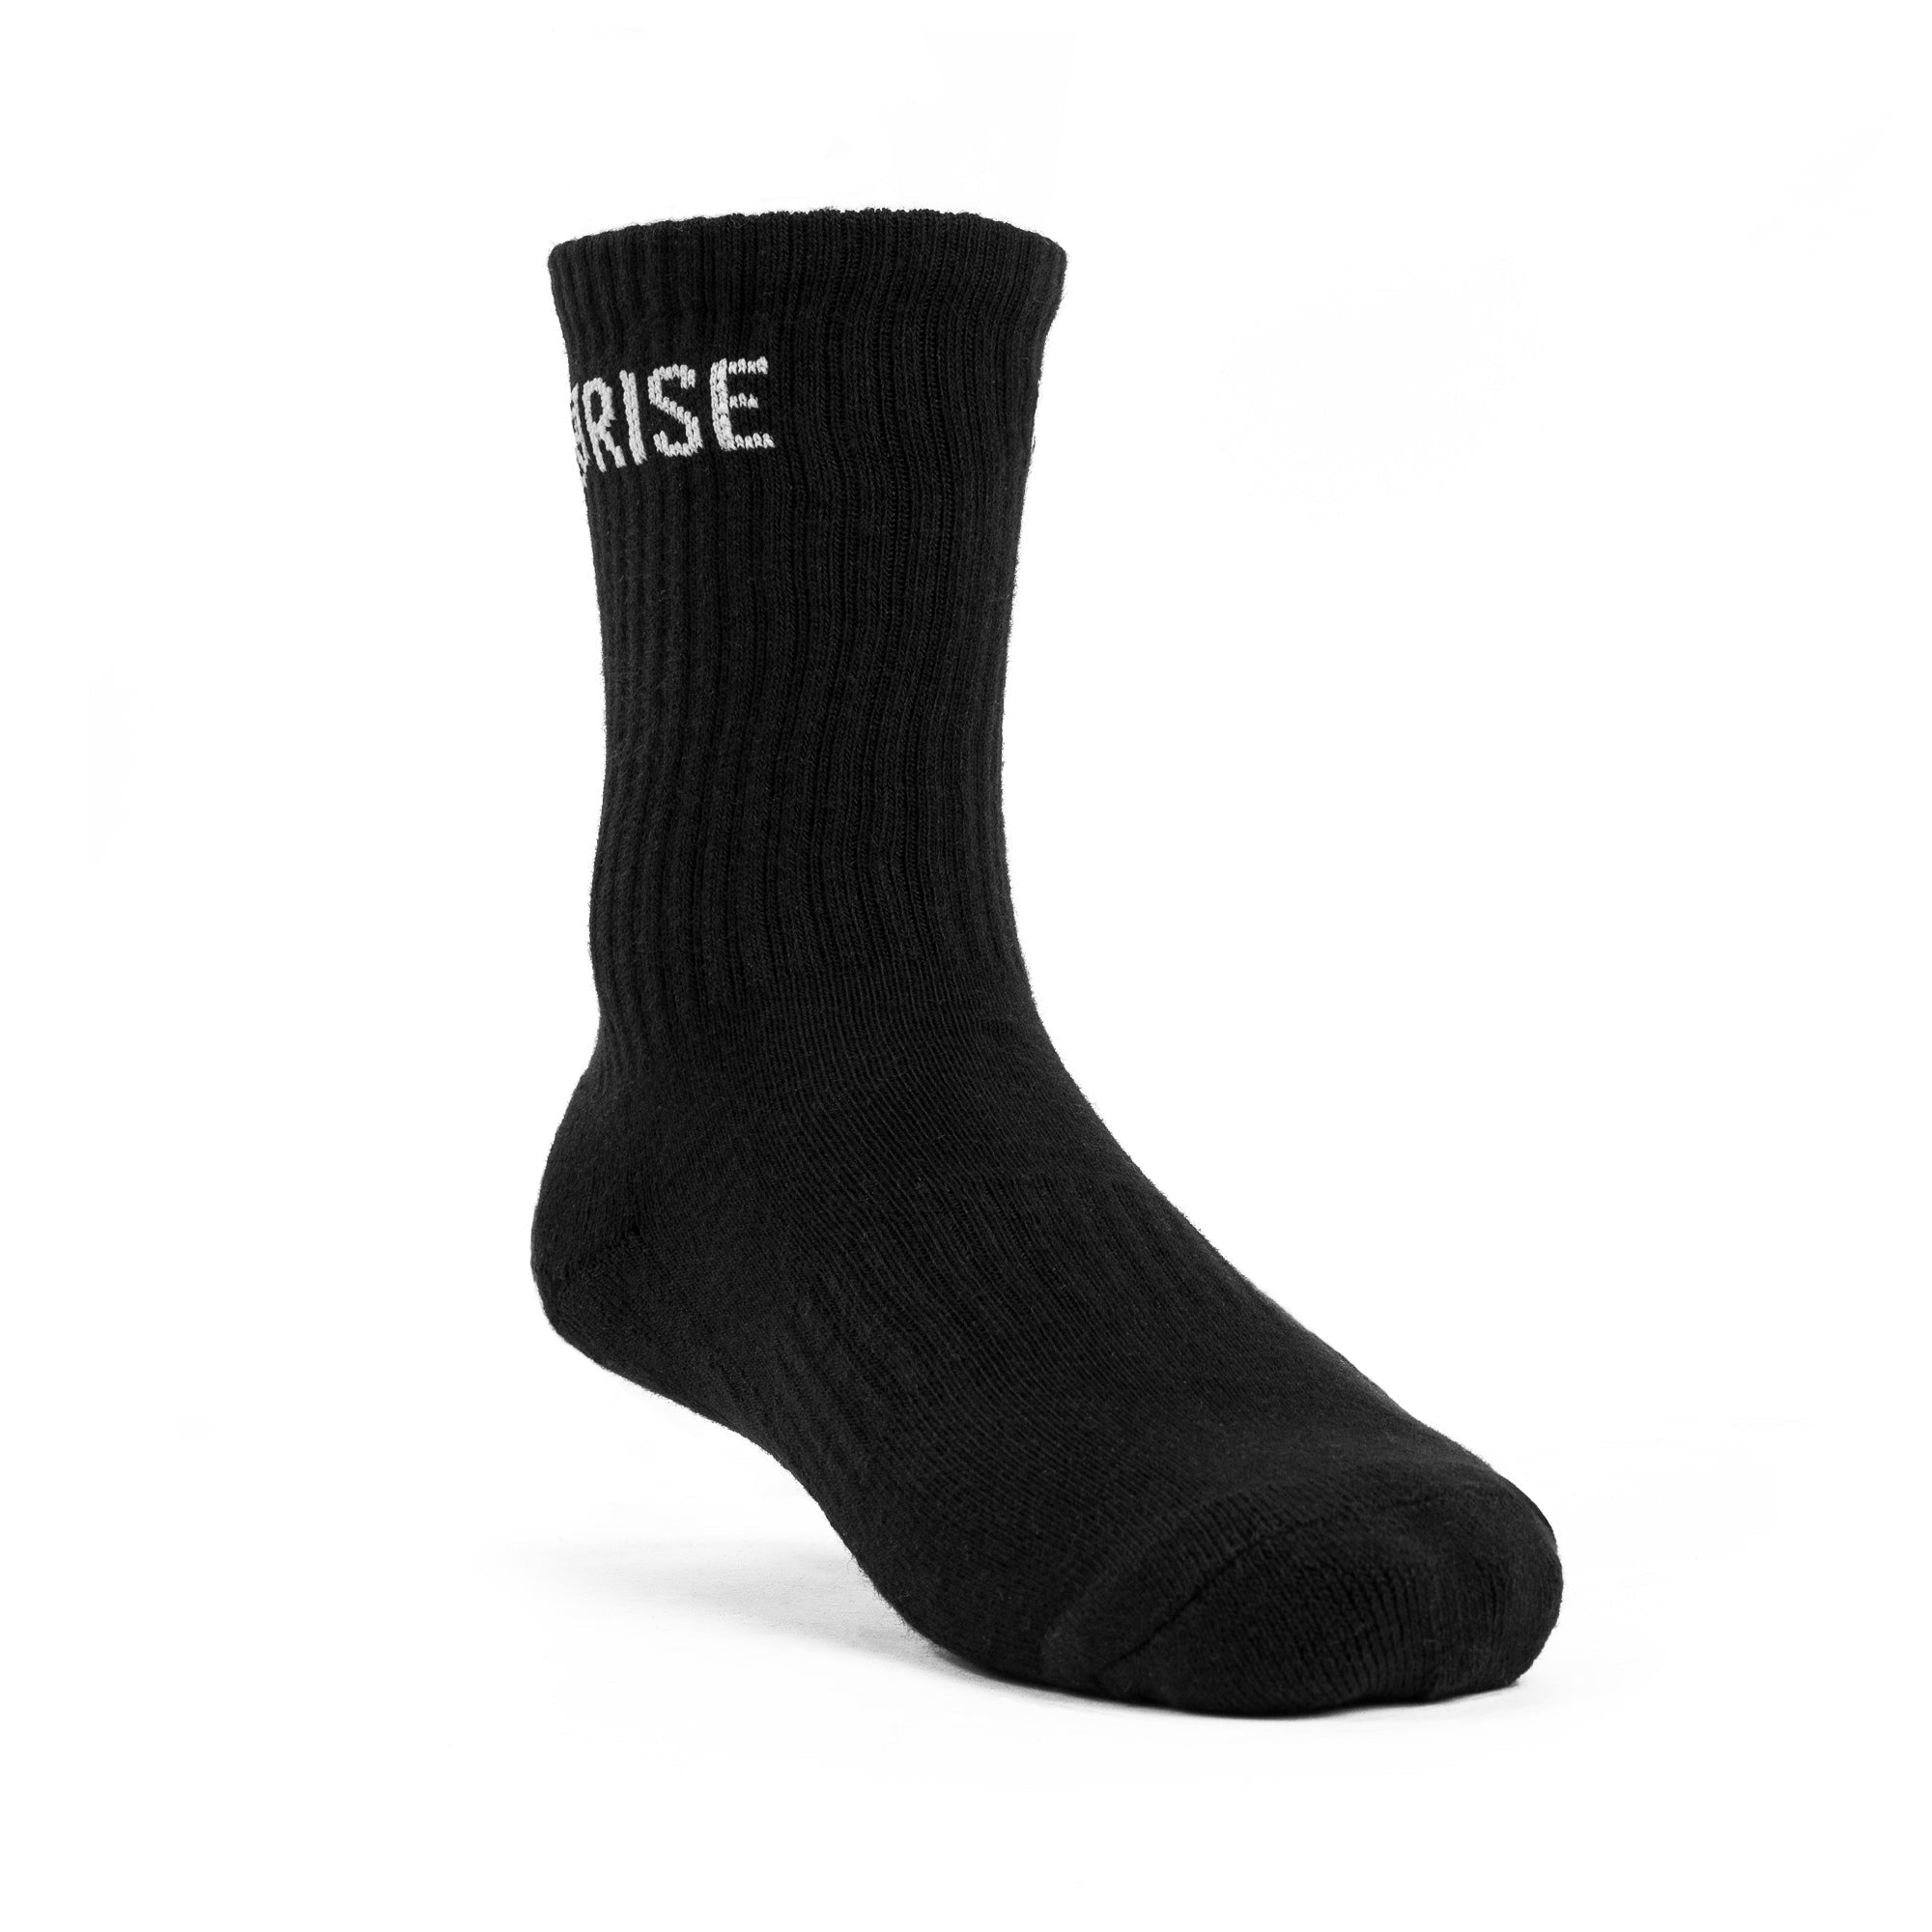 Rise Crew Socks – Black - Rise